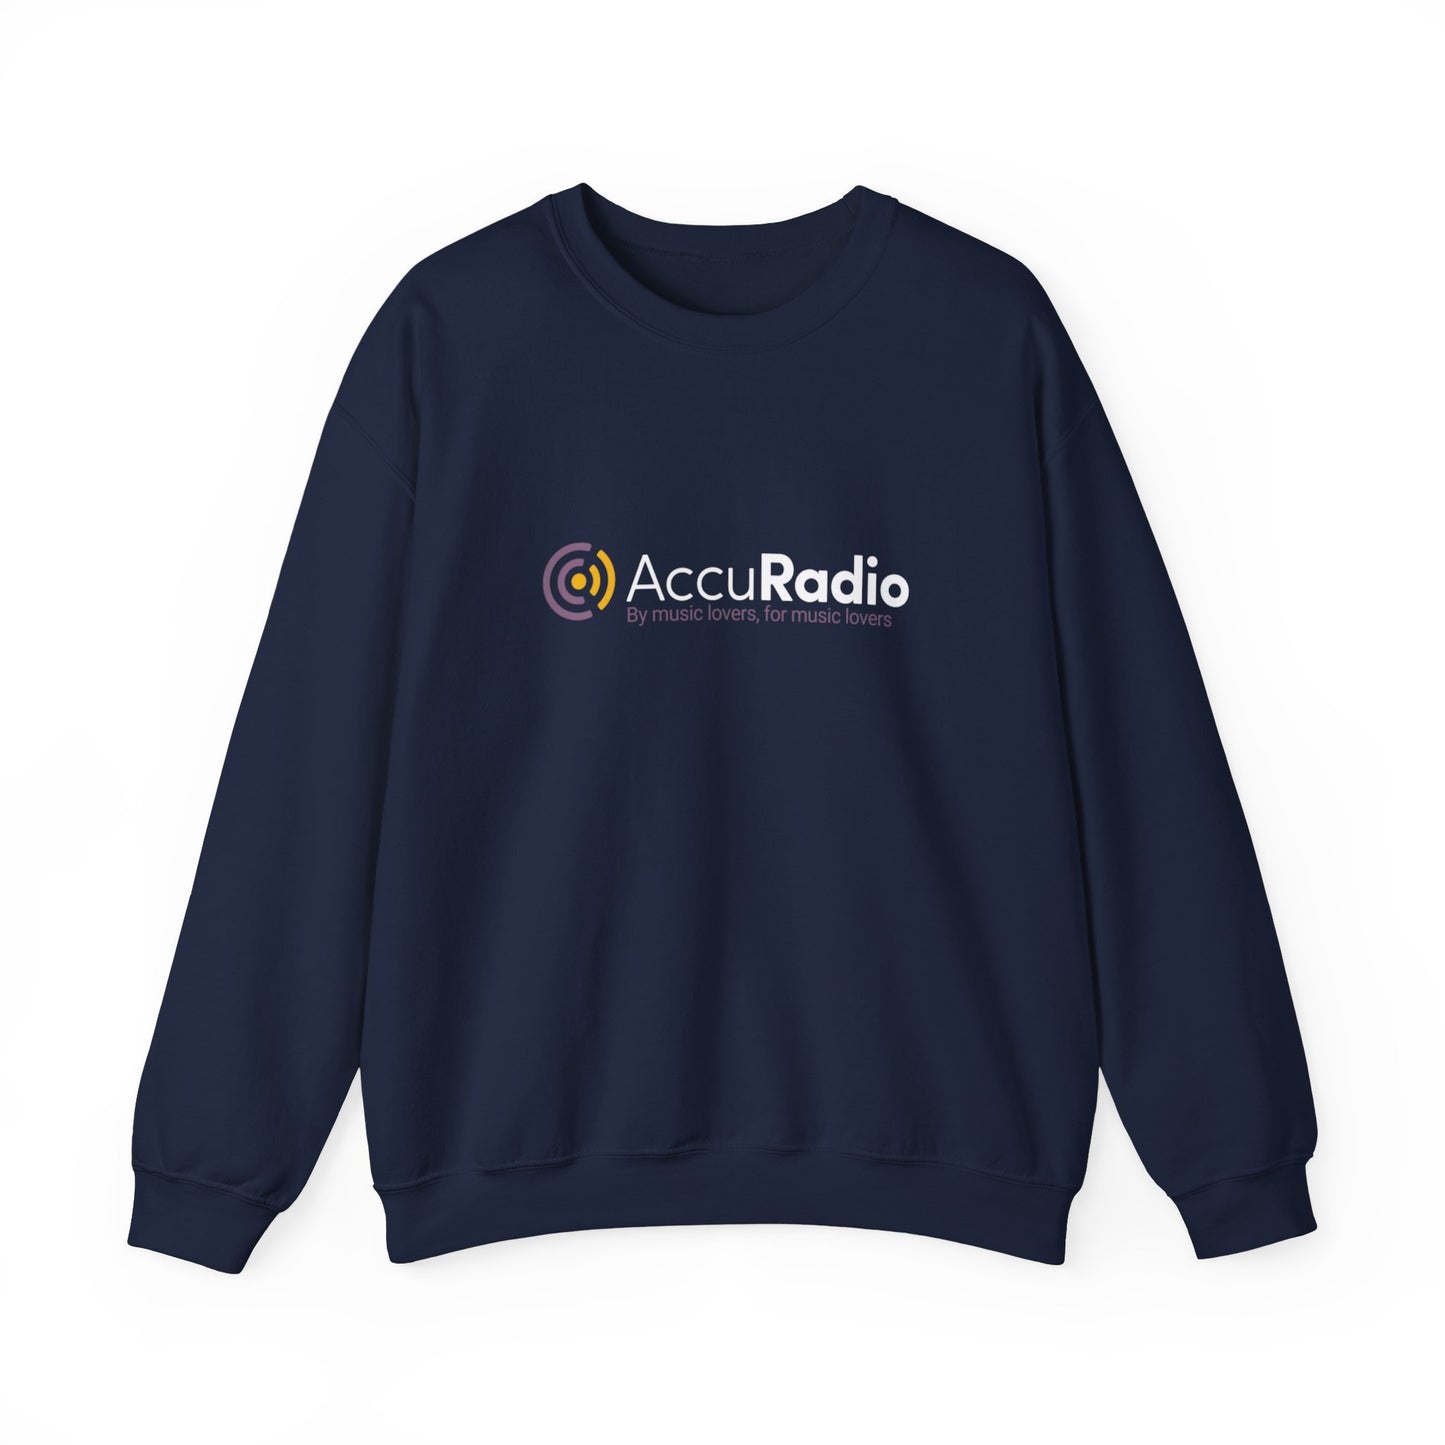 Unisex heavy blend AccuRadio crewneck sweatshirt